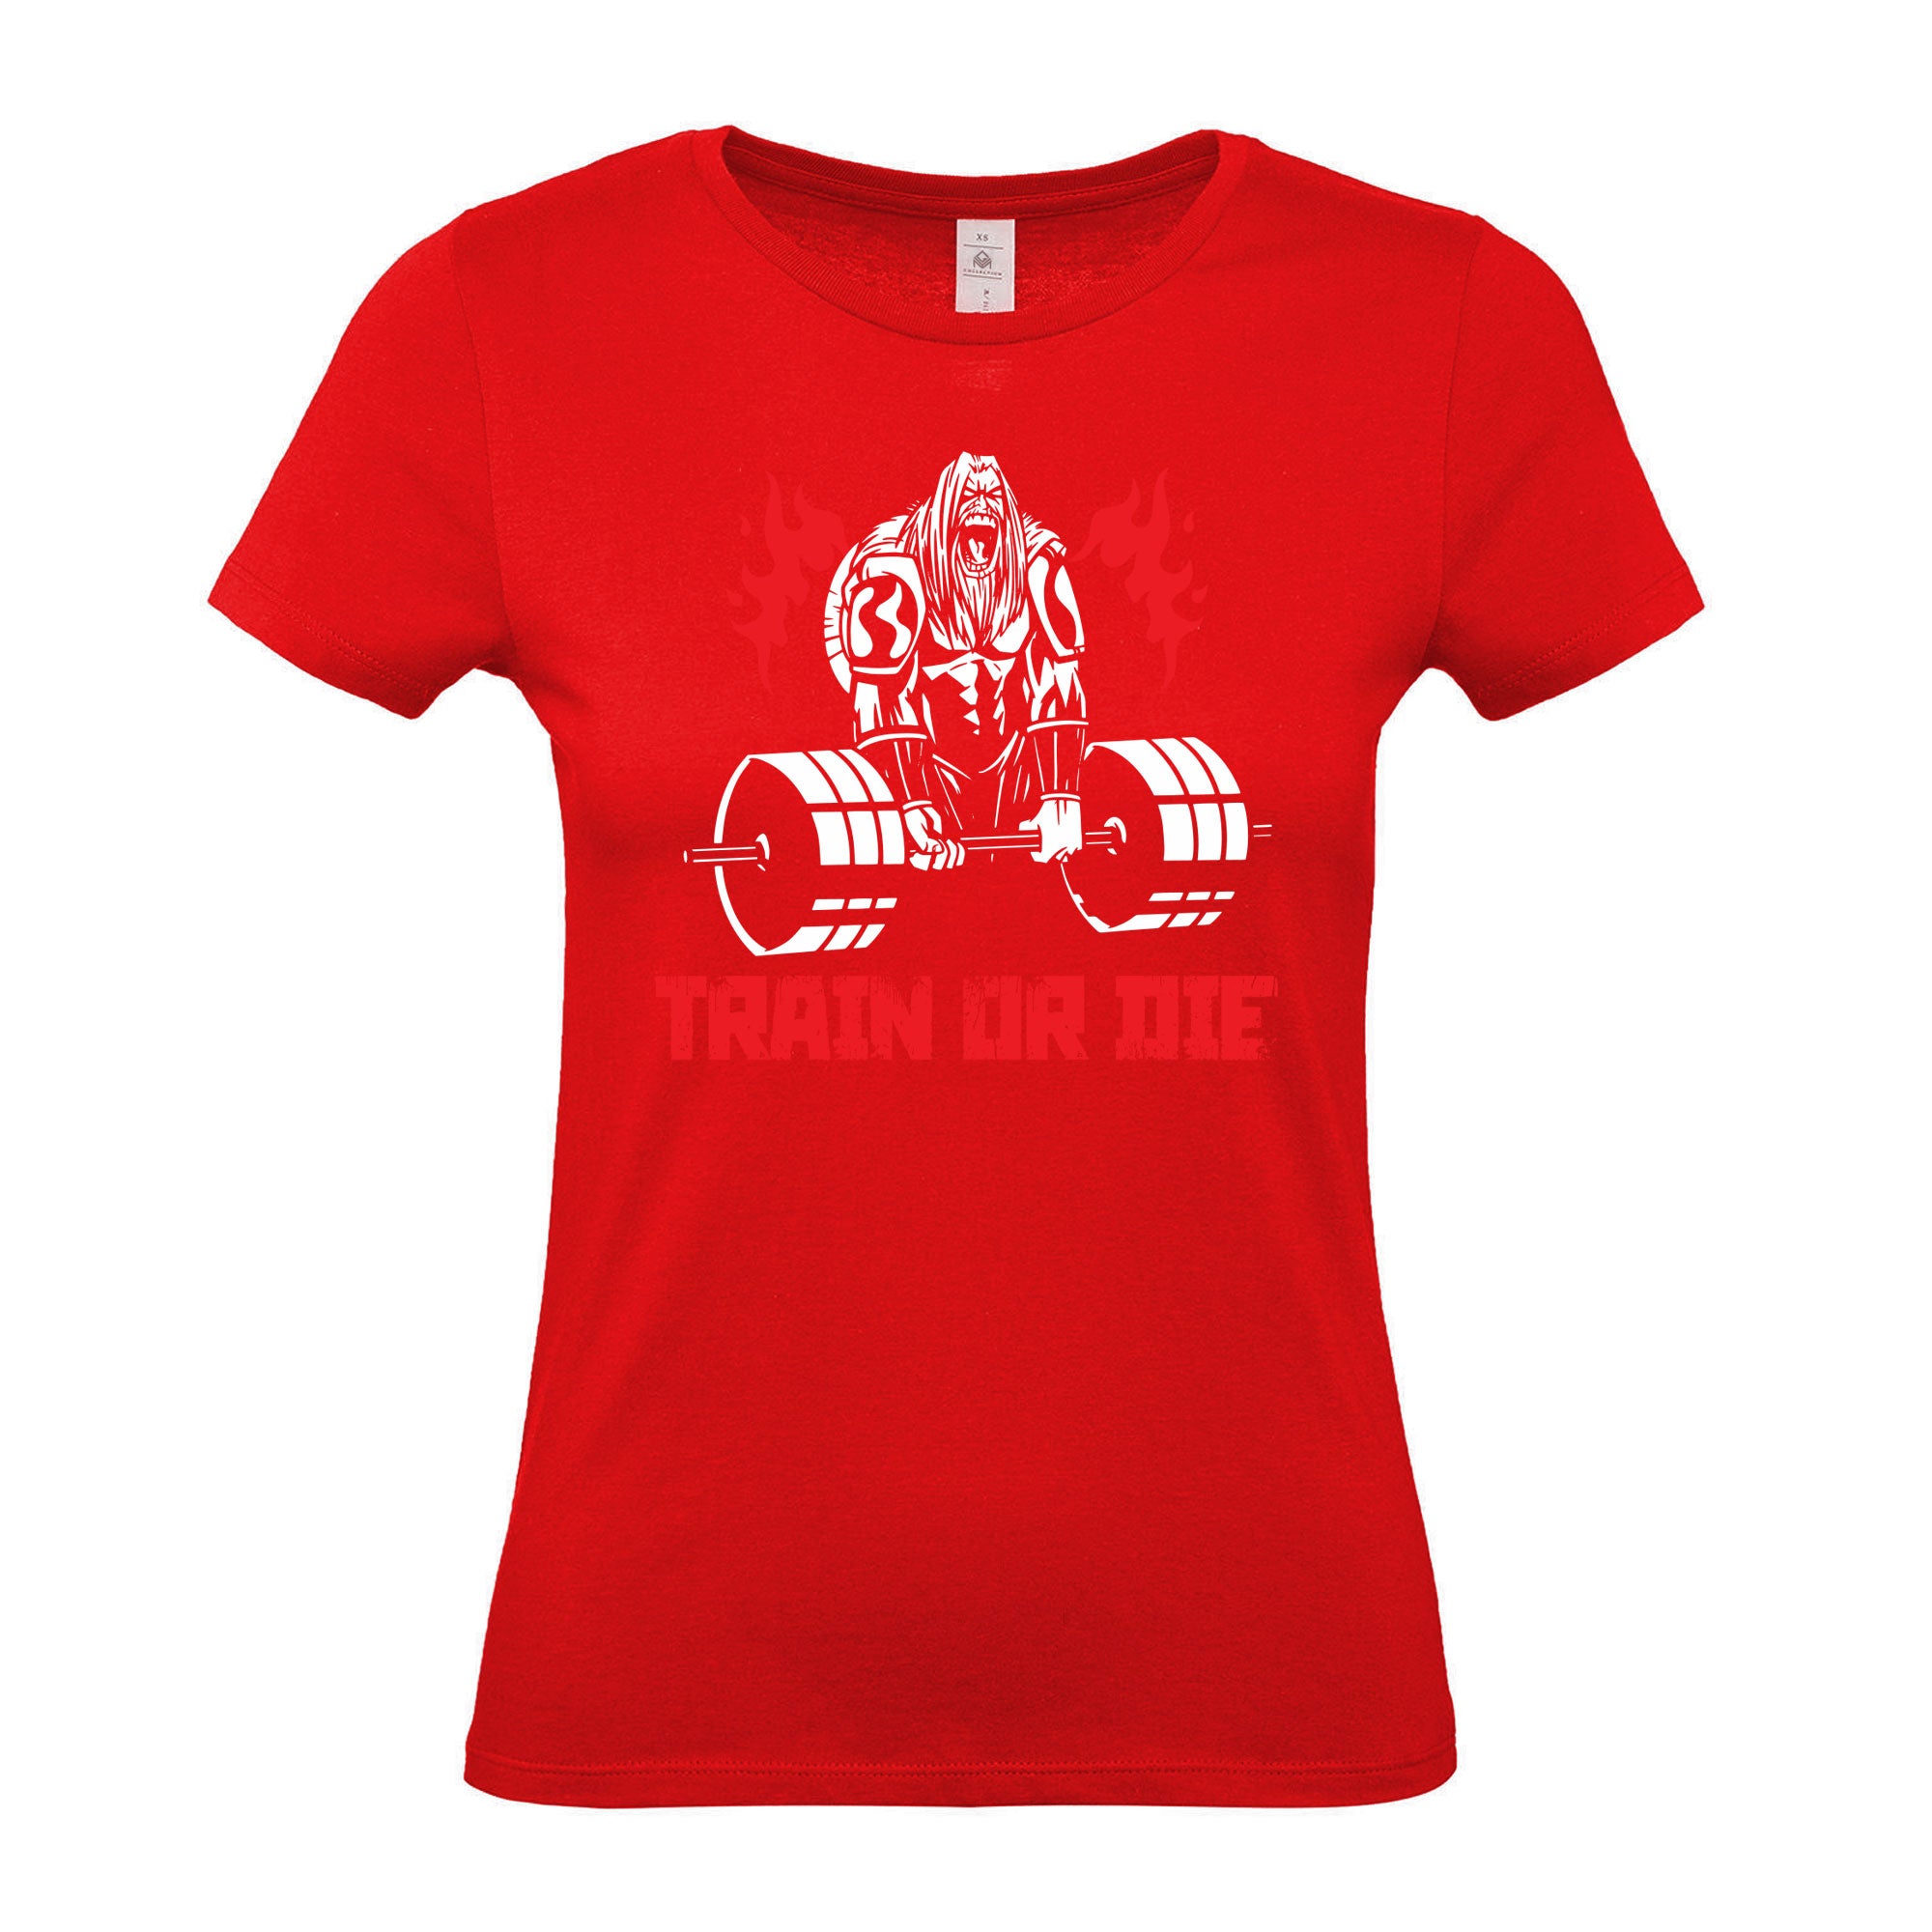 Train Or Die - Women's Gym T-Shirt